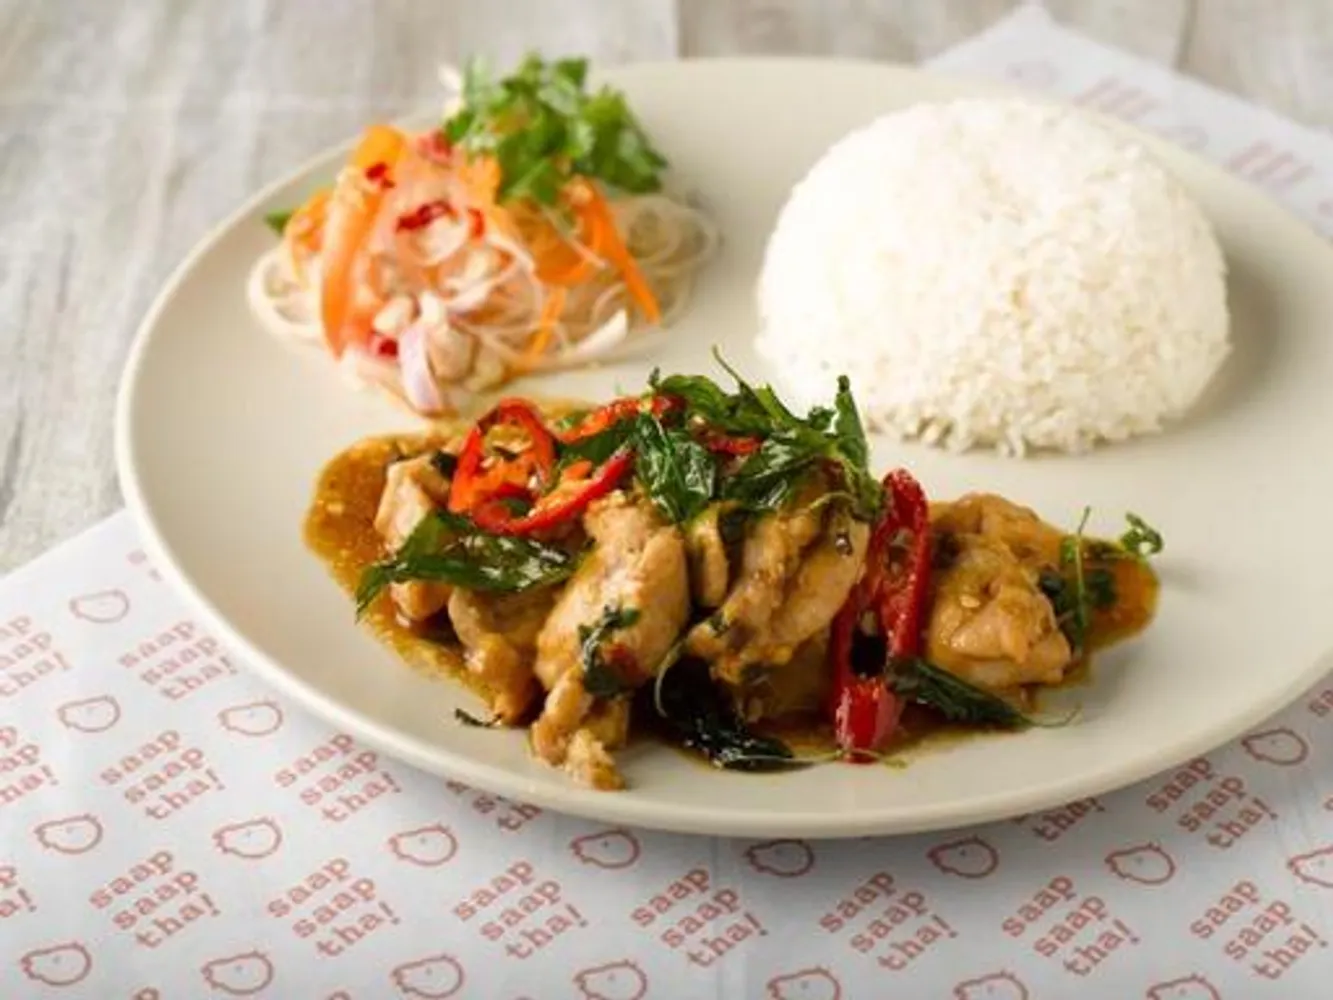 R3 Kra Pao Basil Chicken with Rice